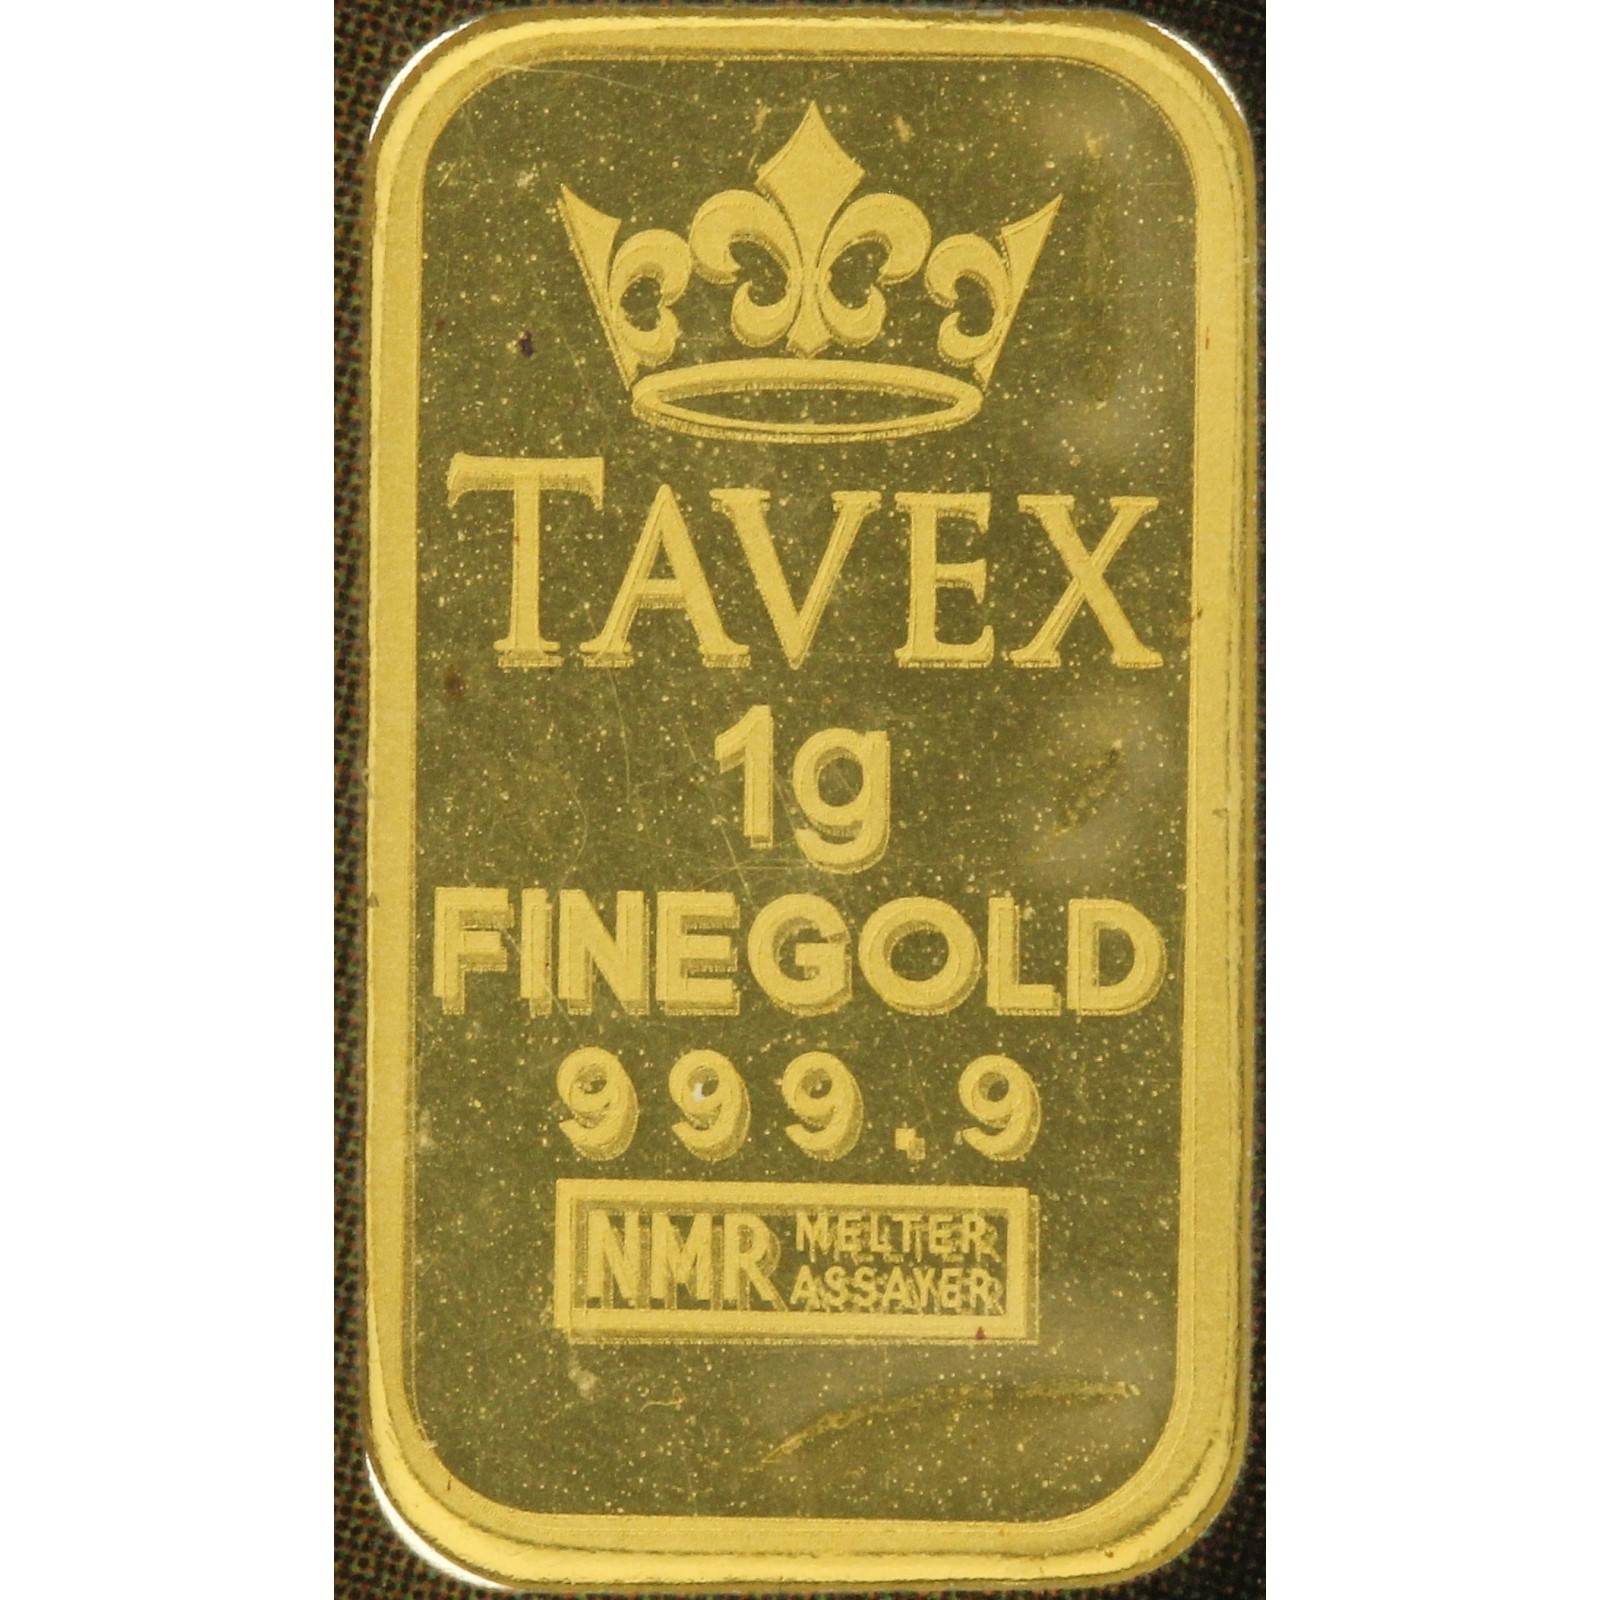 Tavex - 1 gram - bar - fine gold